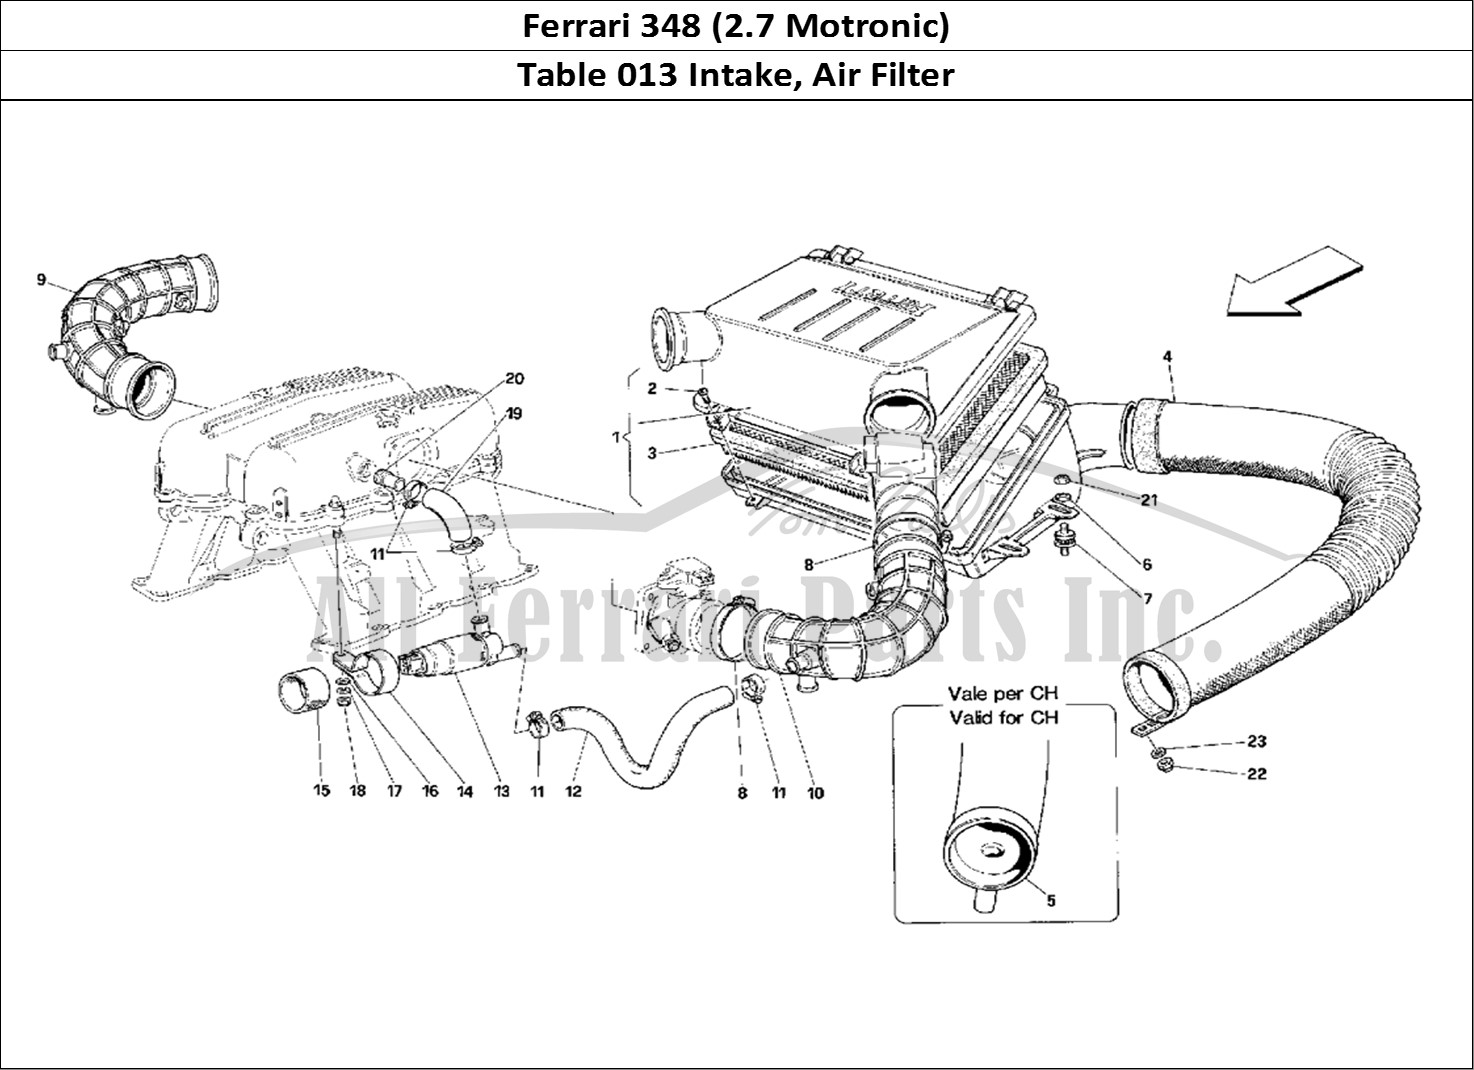 Ferrari Parts Ferrari 348 (2.7 Motronic) Page 013 Air Intake